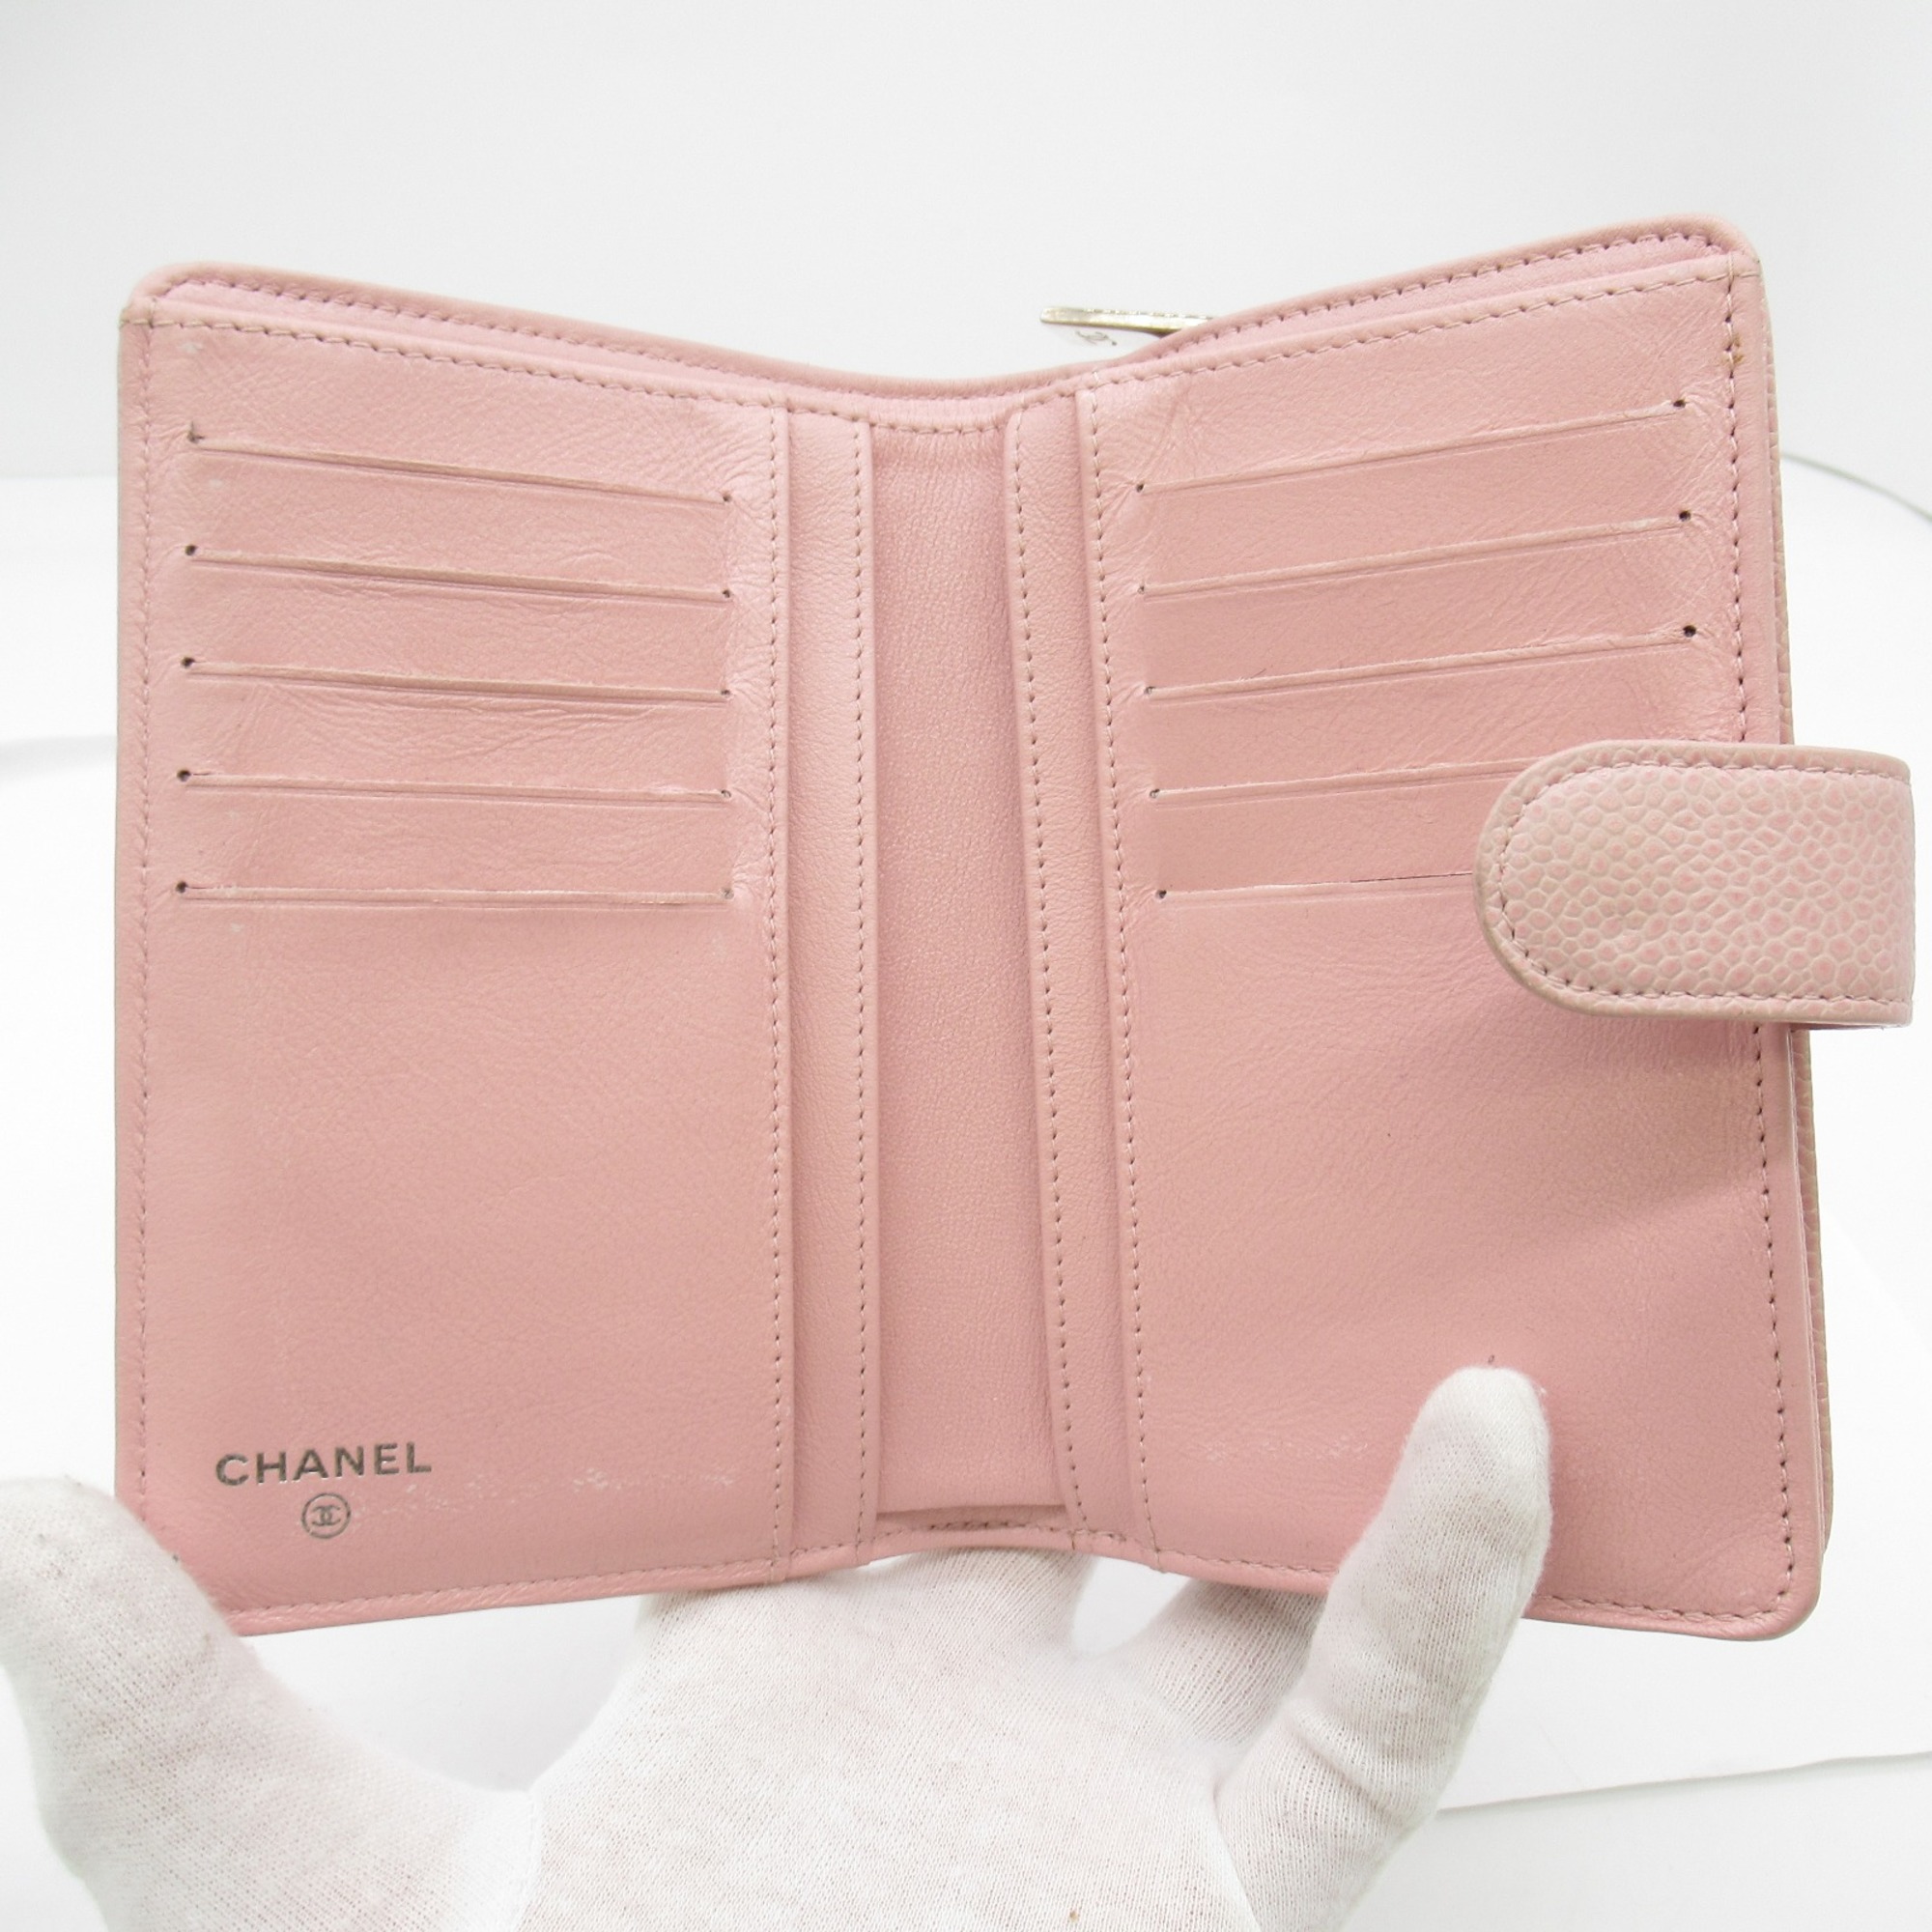 CHANEL wallet Pink Caviar Skin (Grained Calf)